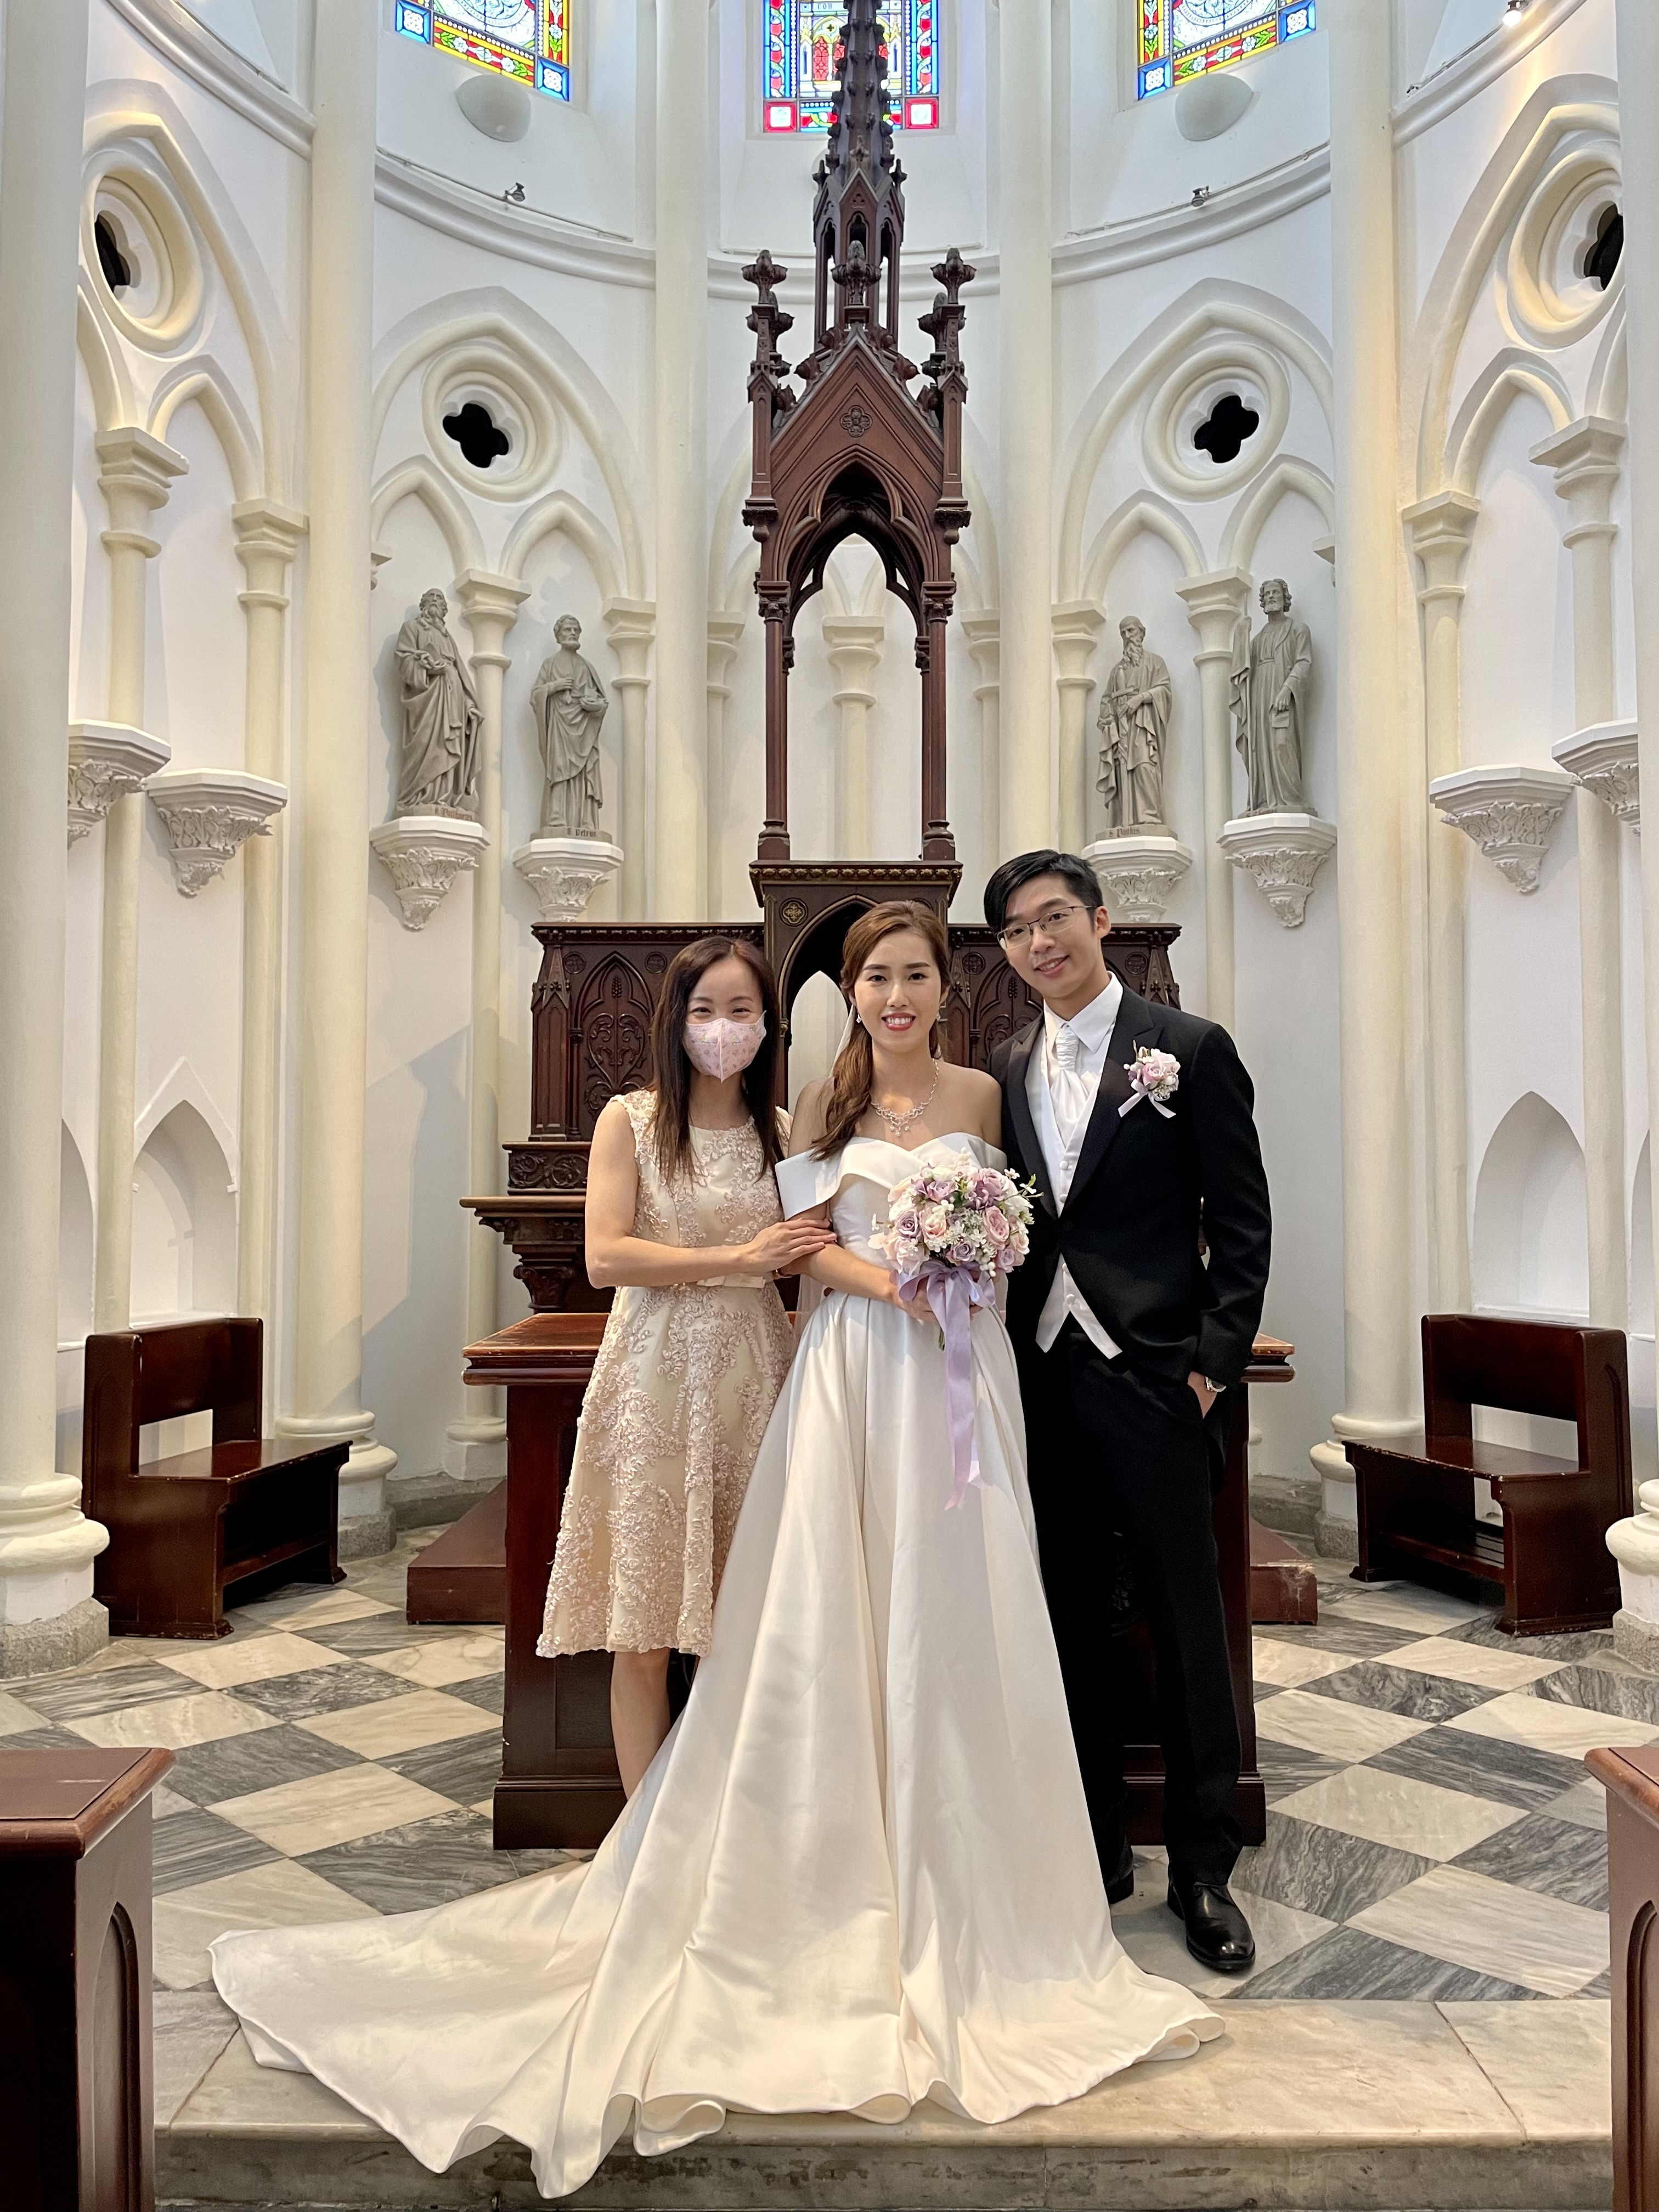 Bless Wedding 首席婚禮統籌及司儀 Angel Leung之婚禮統籌師紀錄: 西式婚禮 - 全日婚禮統籌及婚禮司儀 Wedding Planner & Wedding MC @伯大尼教堂